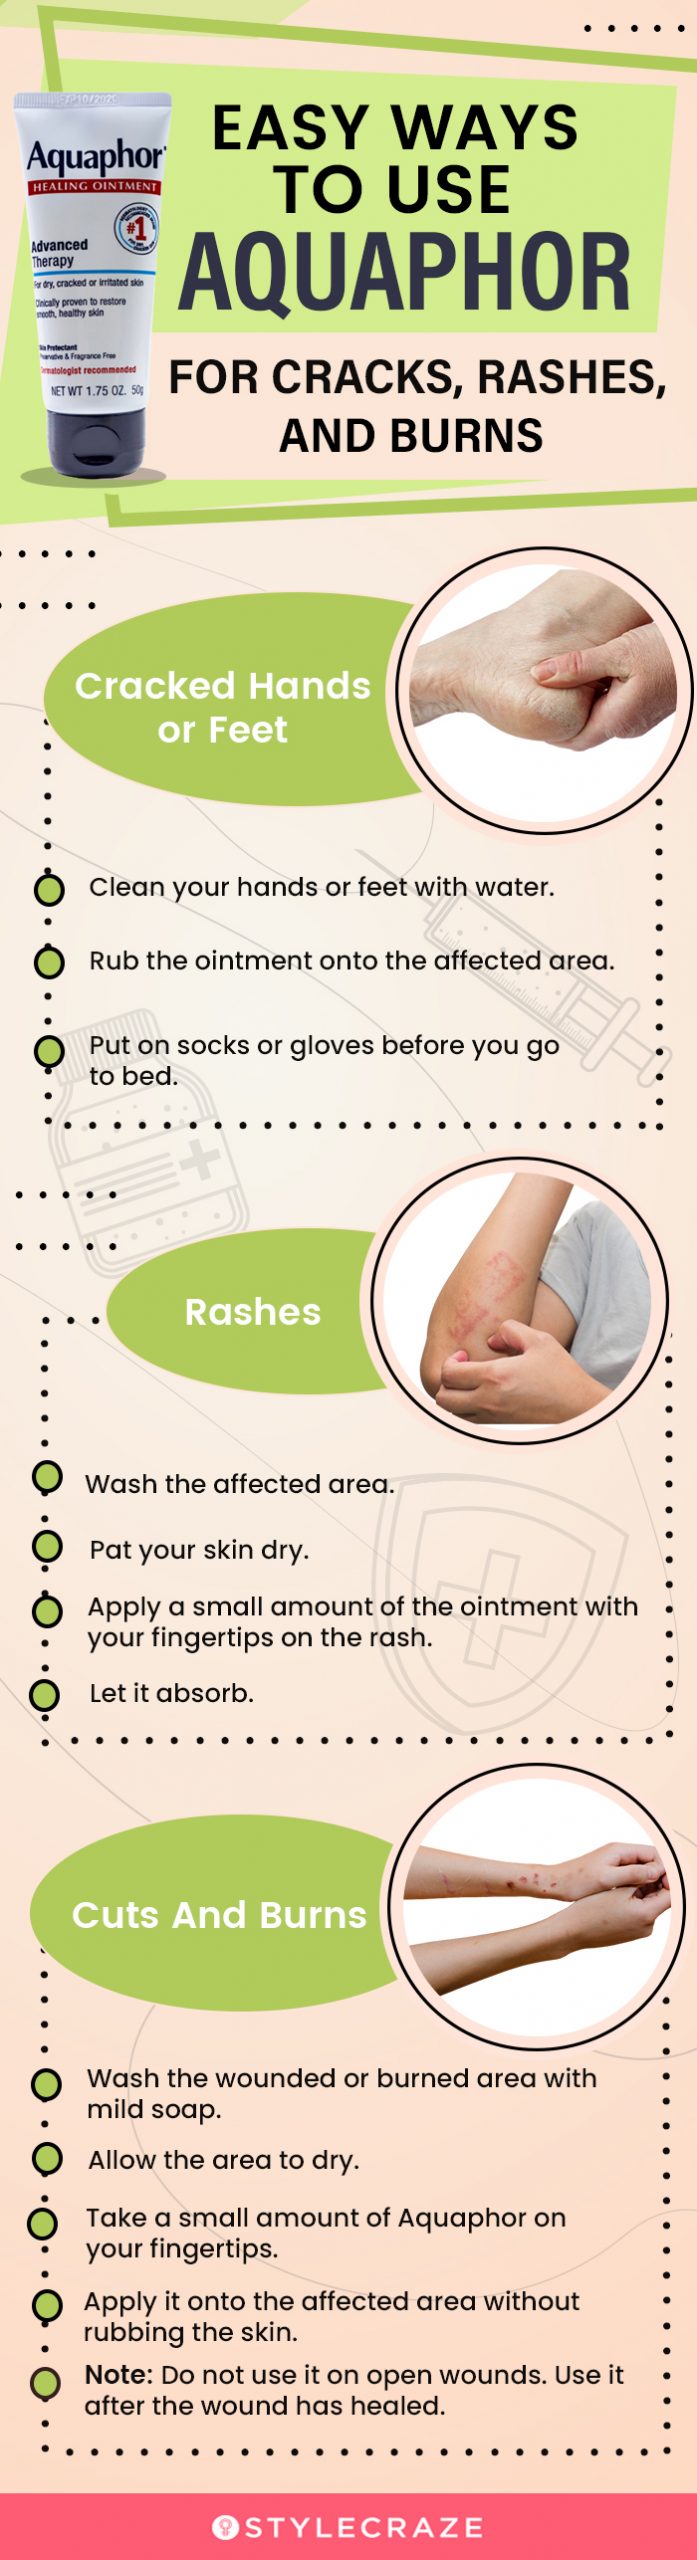 easy ways to use aquaphor for cracks, rashes, and burns (infographic)